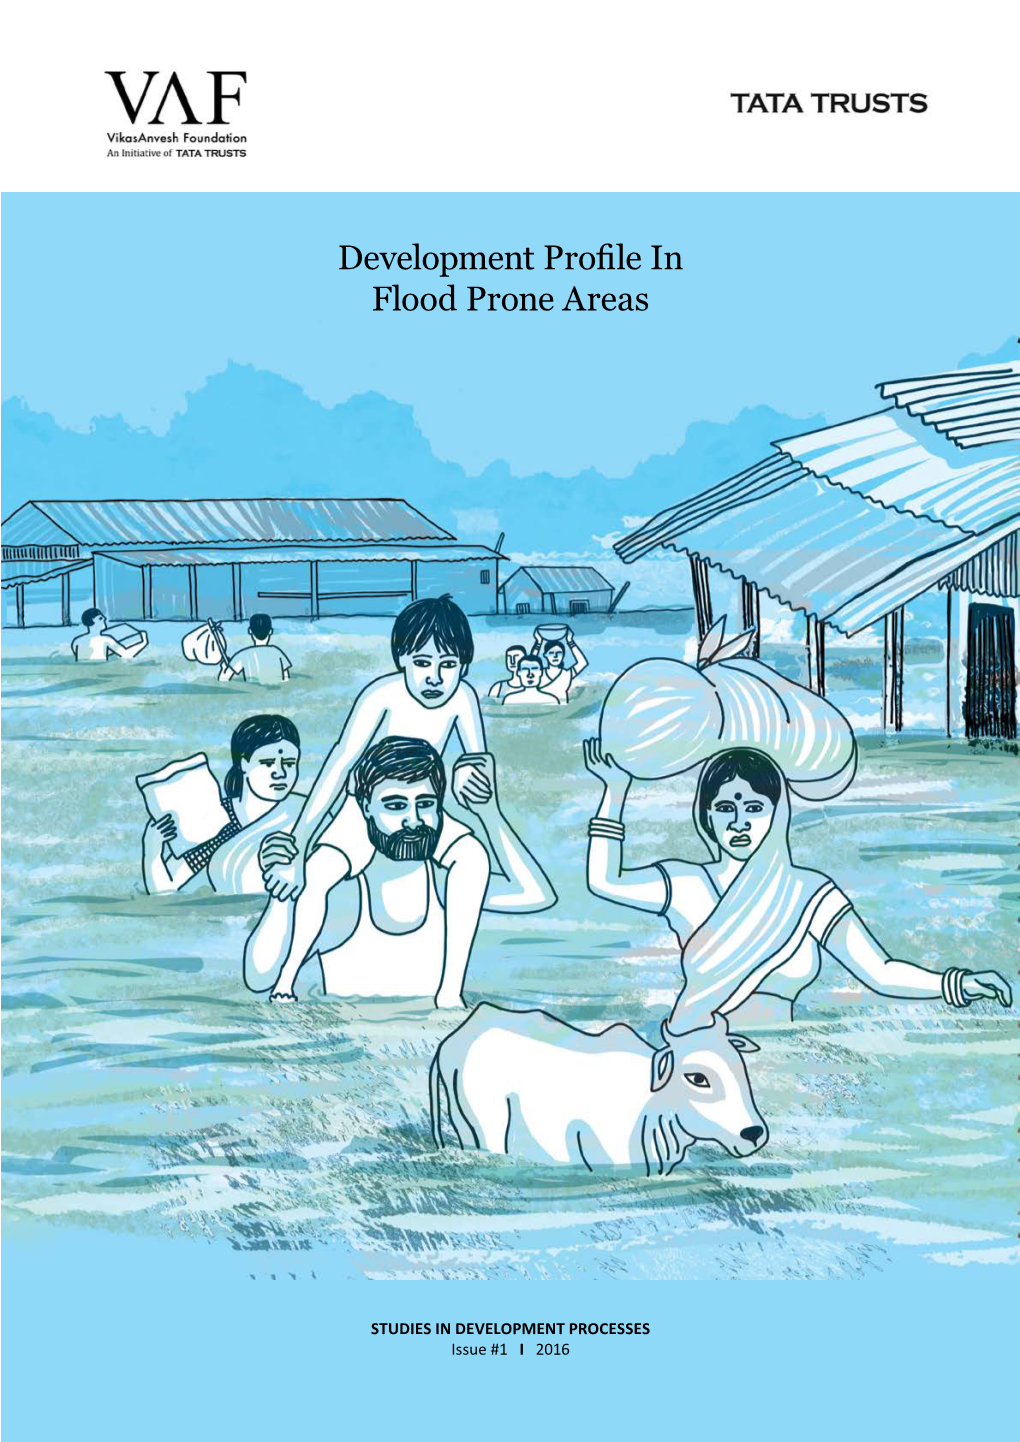 Development Profile in Flood Prone Areas